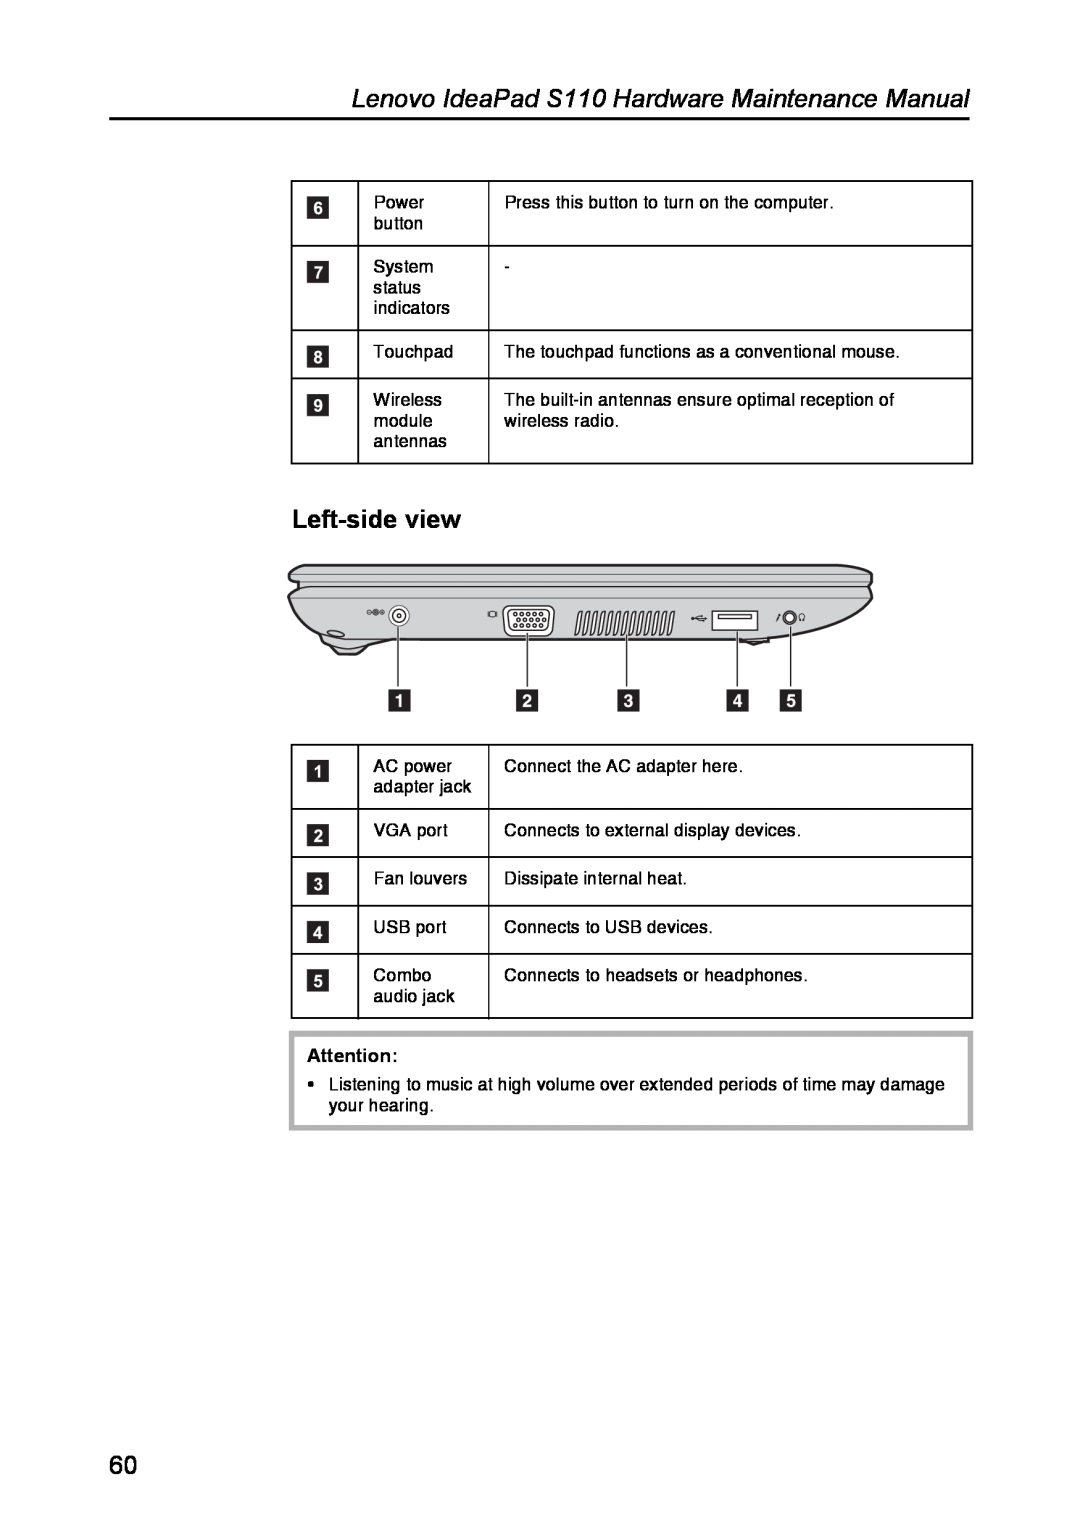 Lenovo manual Left-side view, Lenovo IdeaPad S110 Hardware Maintenance Manual 